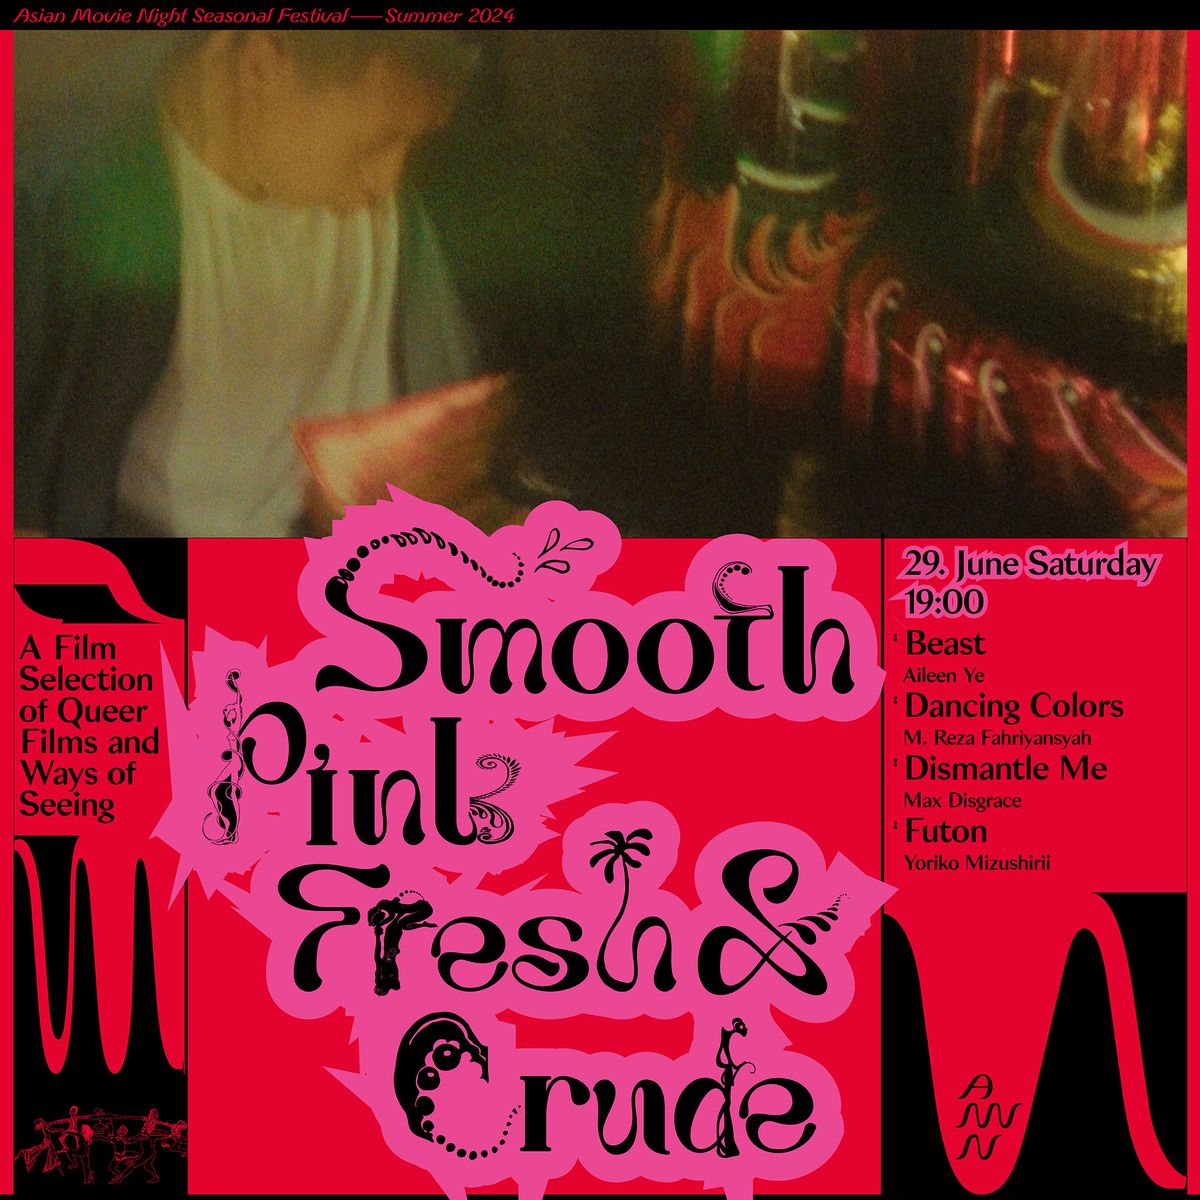 Asian Movie Night presents: Smooth Pink Fresh & Crude